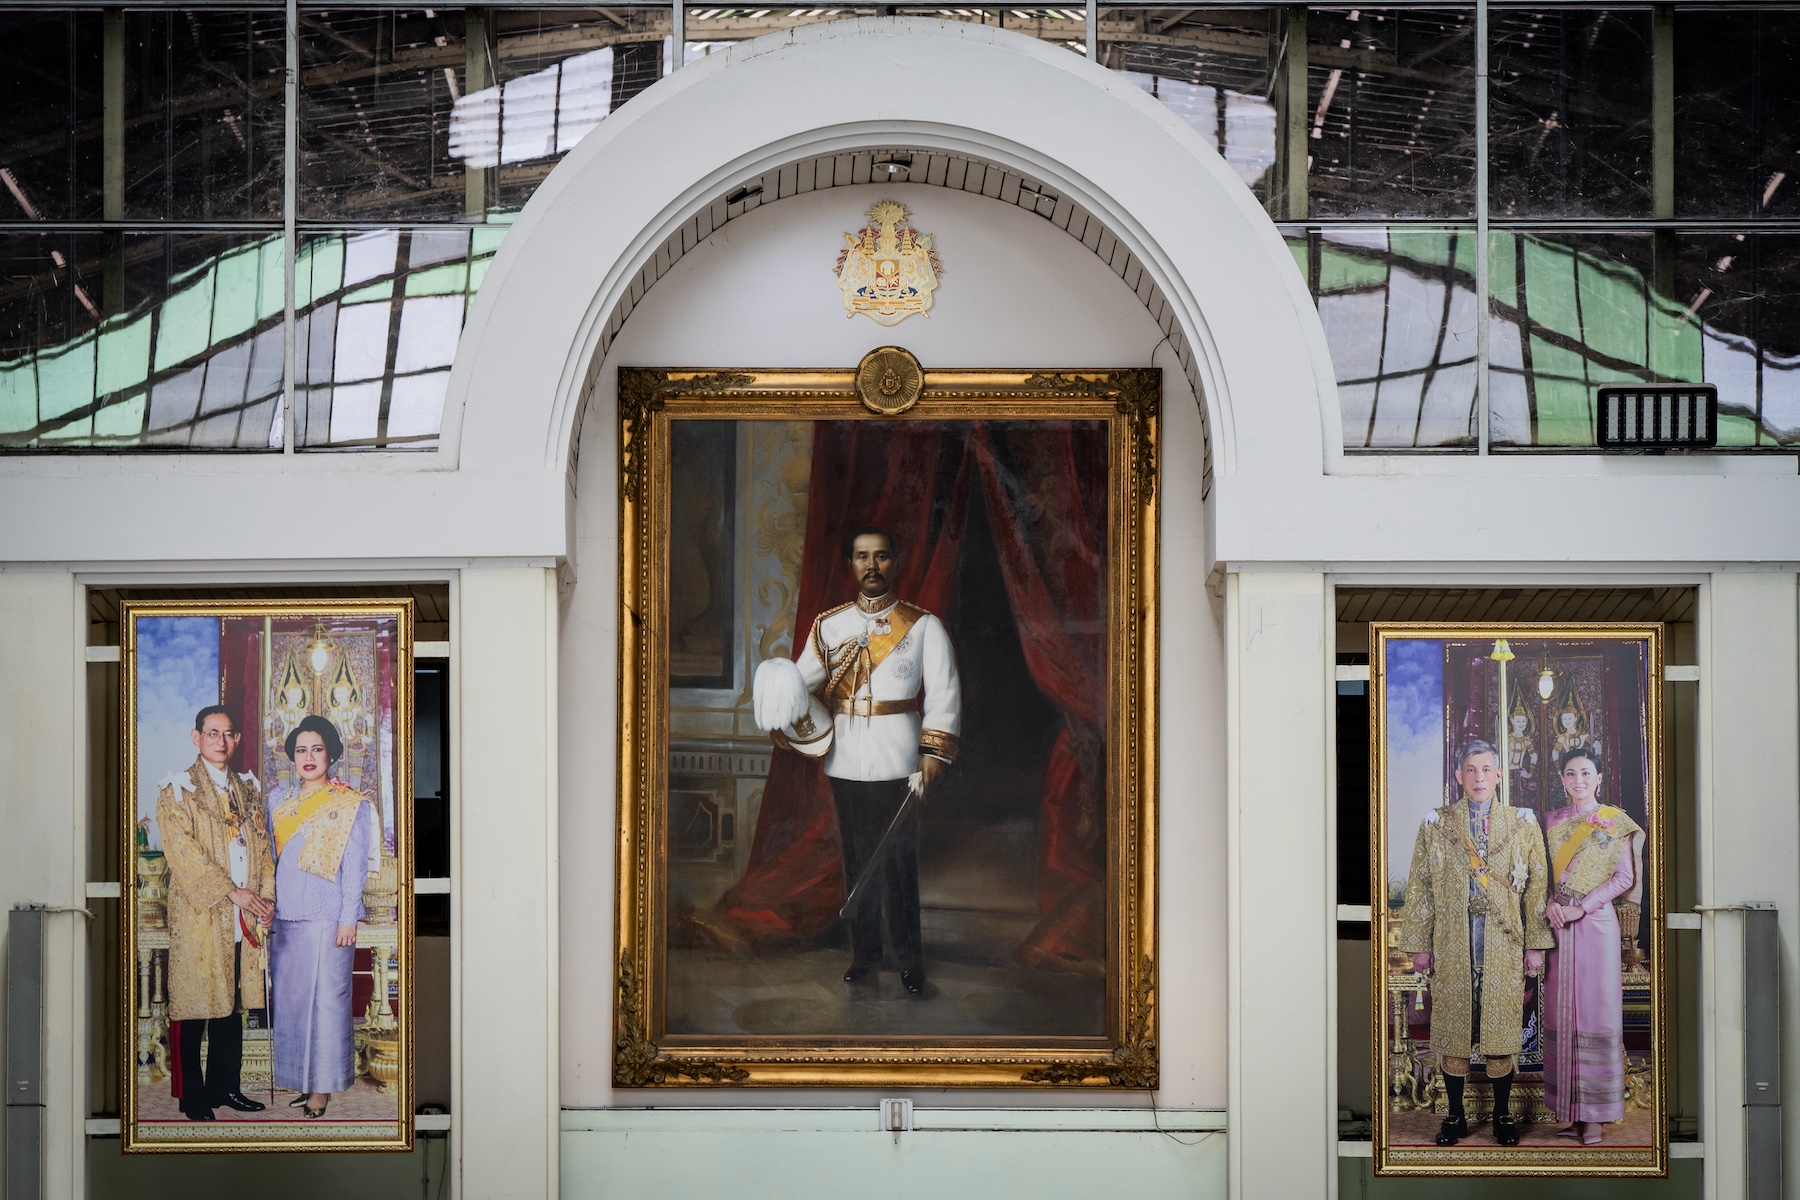 Portraits of King Bhumibol Adulyadej with Queen Sirikit, King Chulalongkorn, and King Vajiralongkorn with Queen Suthida are seen hanging in Hua Lamphong Railway Station